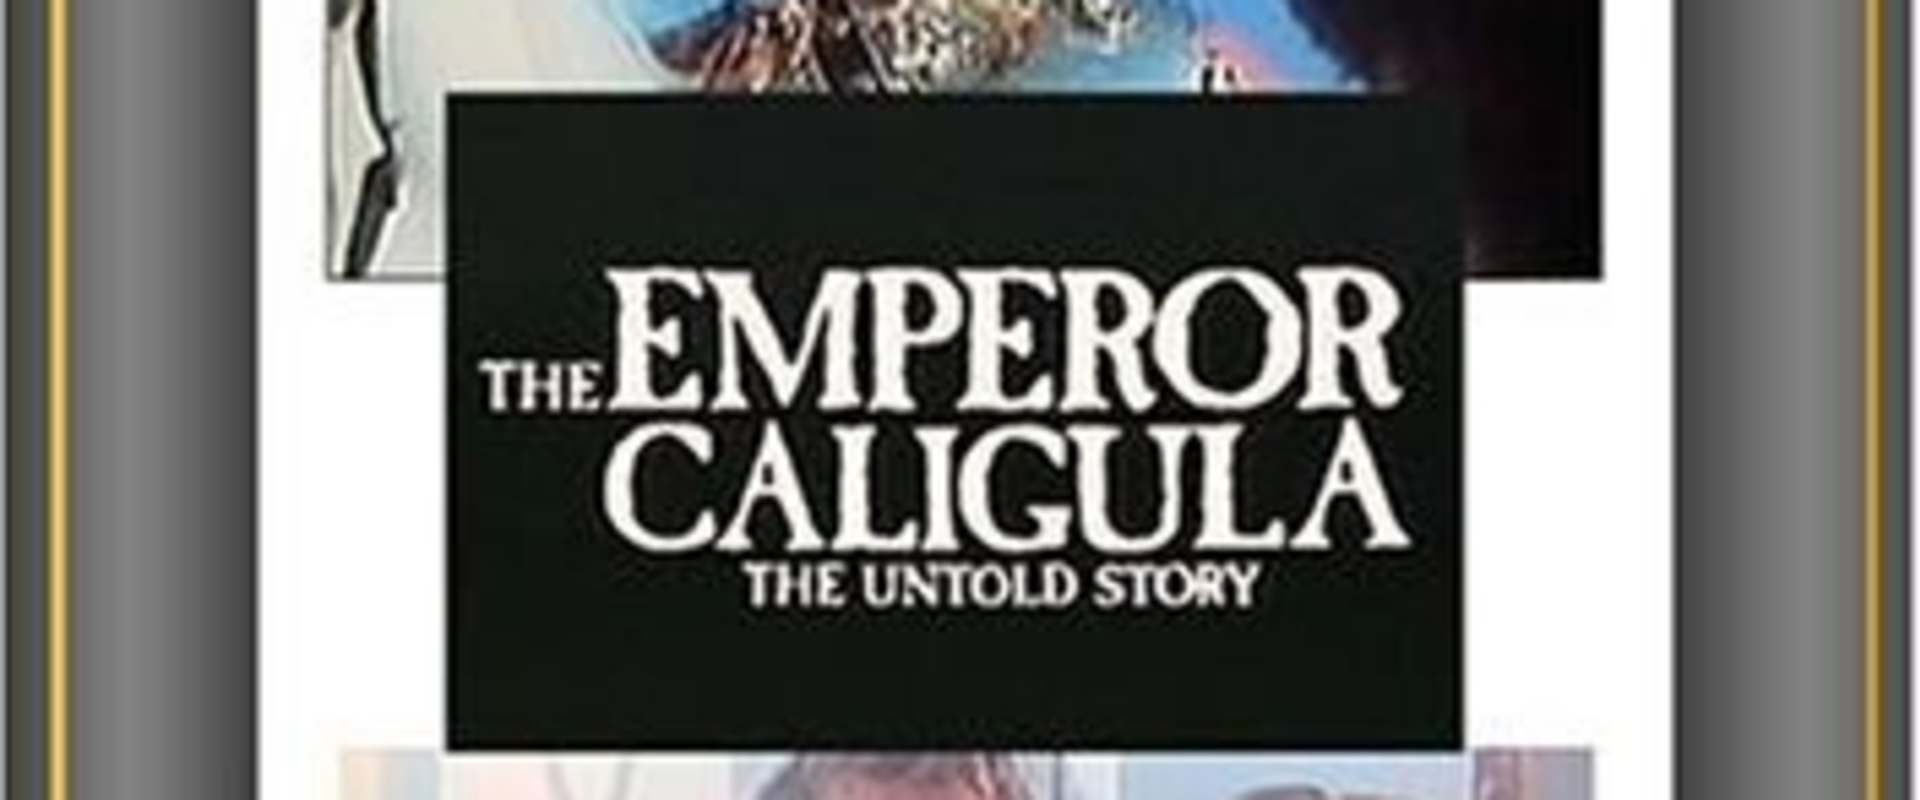 Caligula: The Untold Story background 1